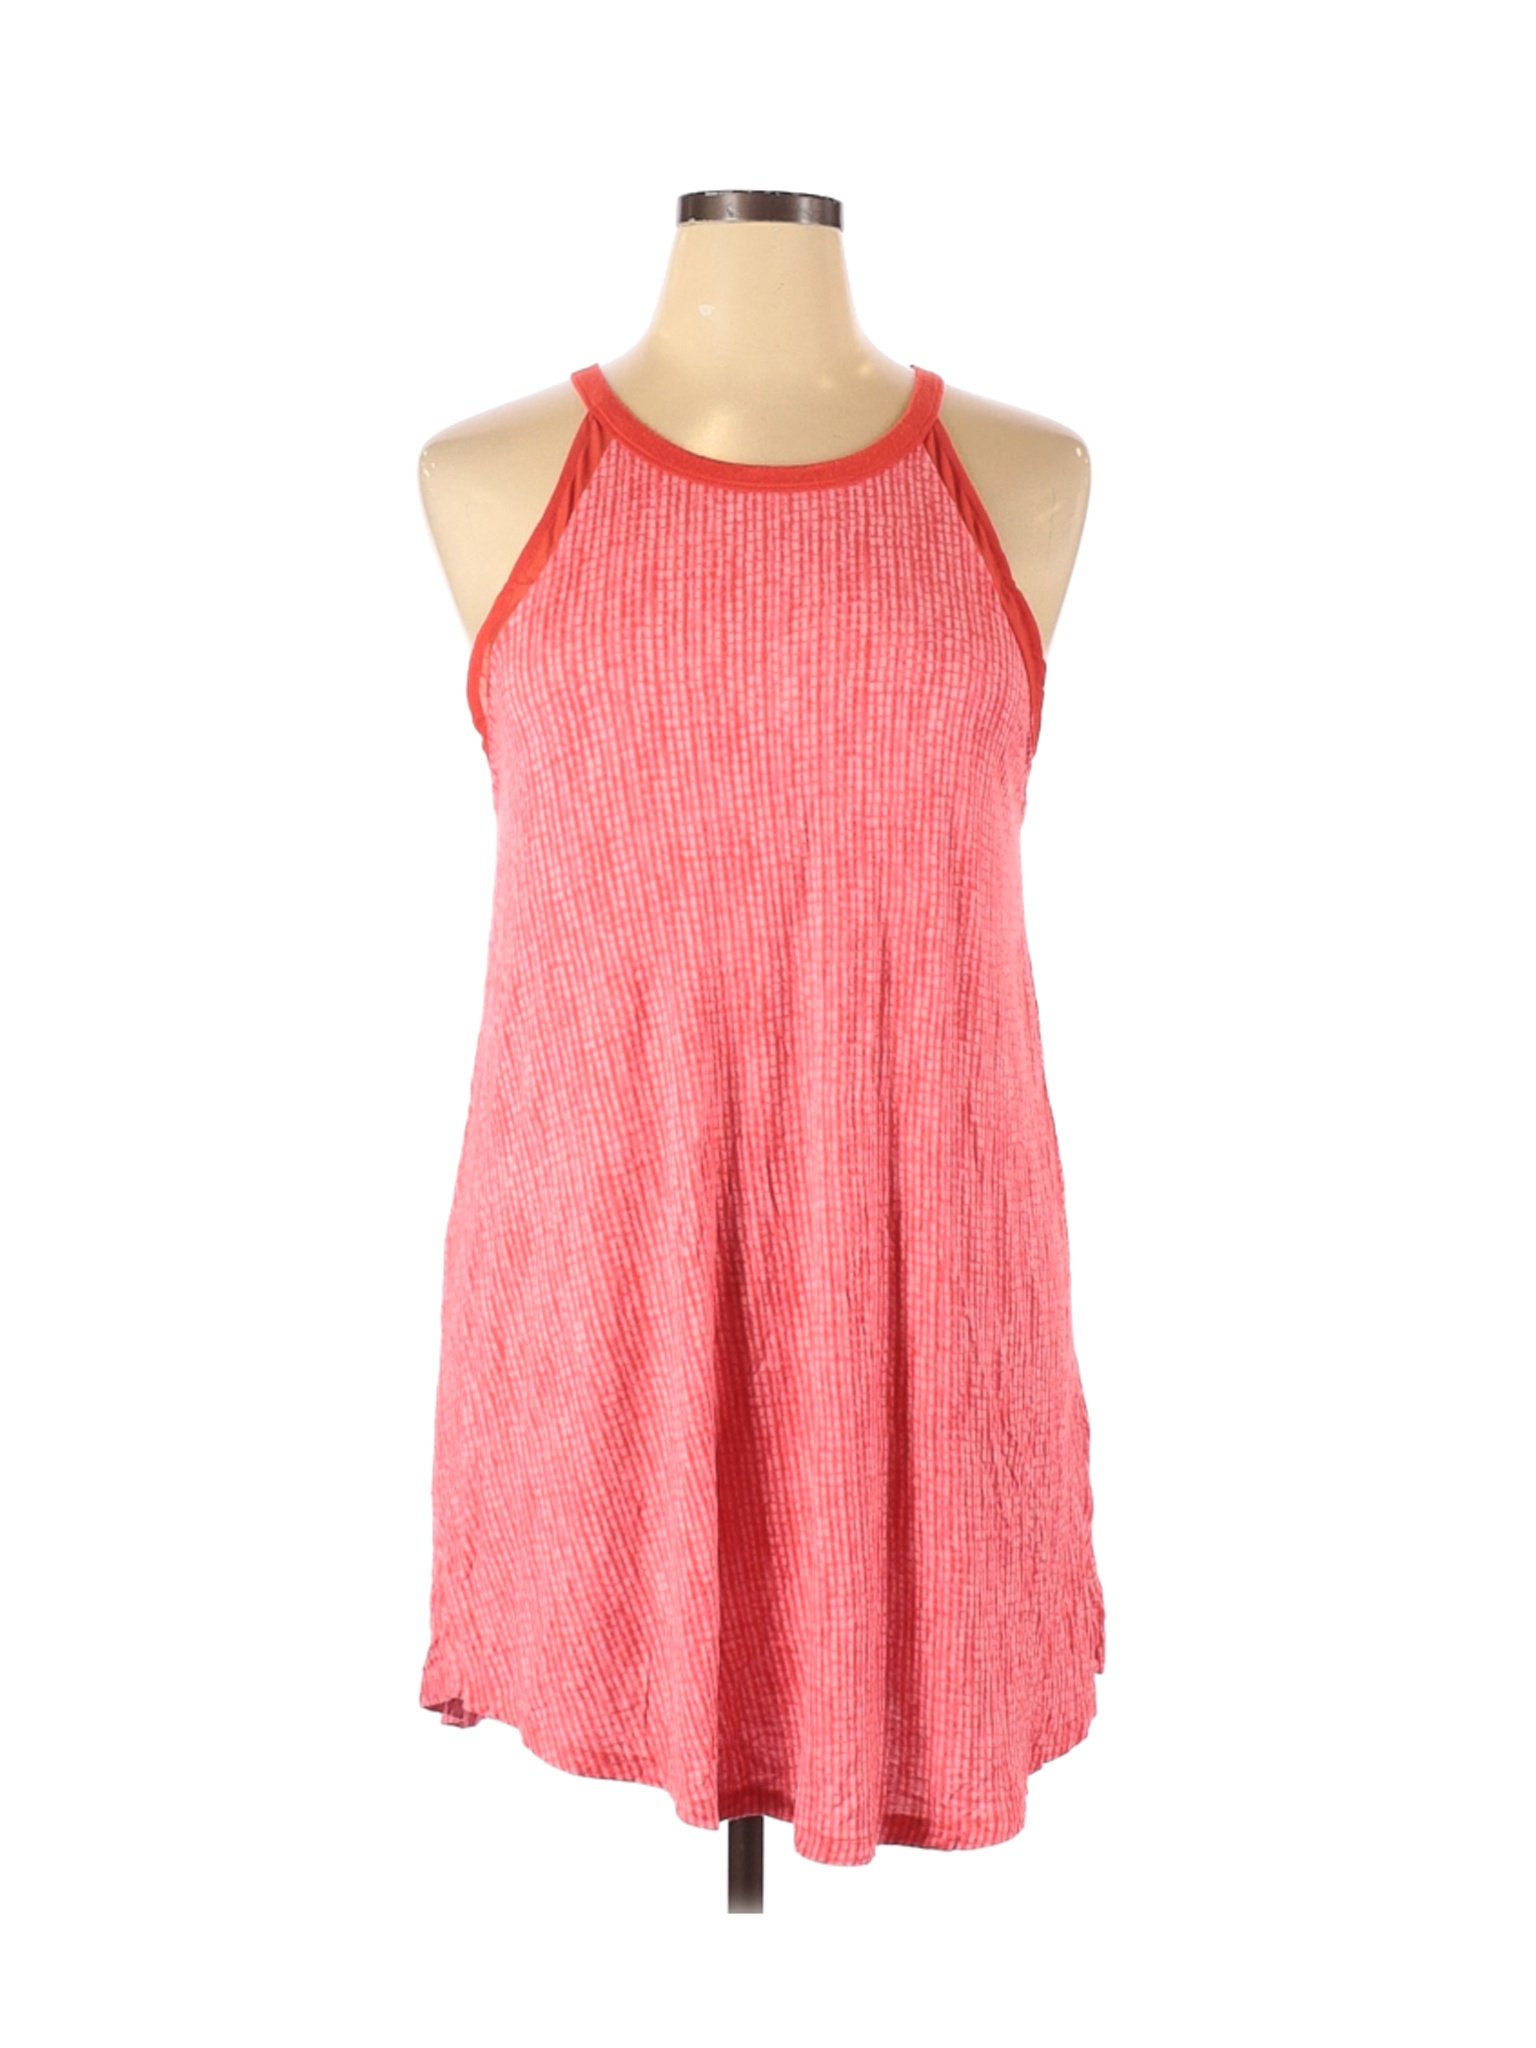 DKNY Women Pink Casual Dress XL | eBay